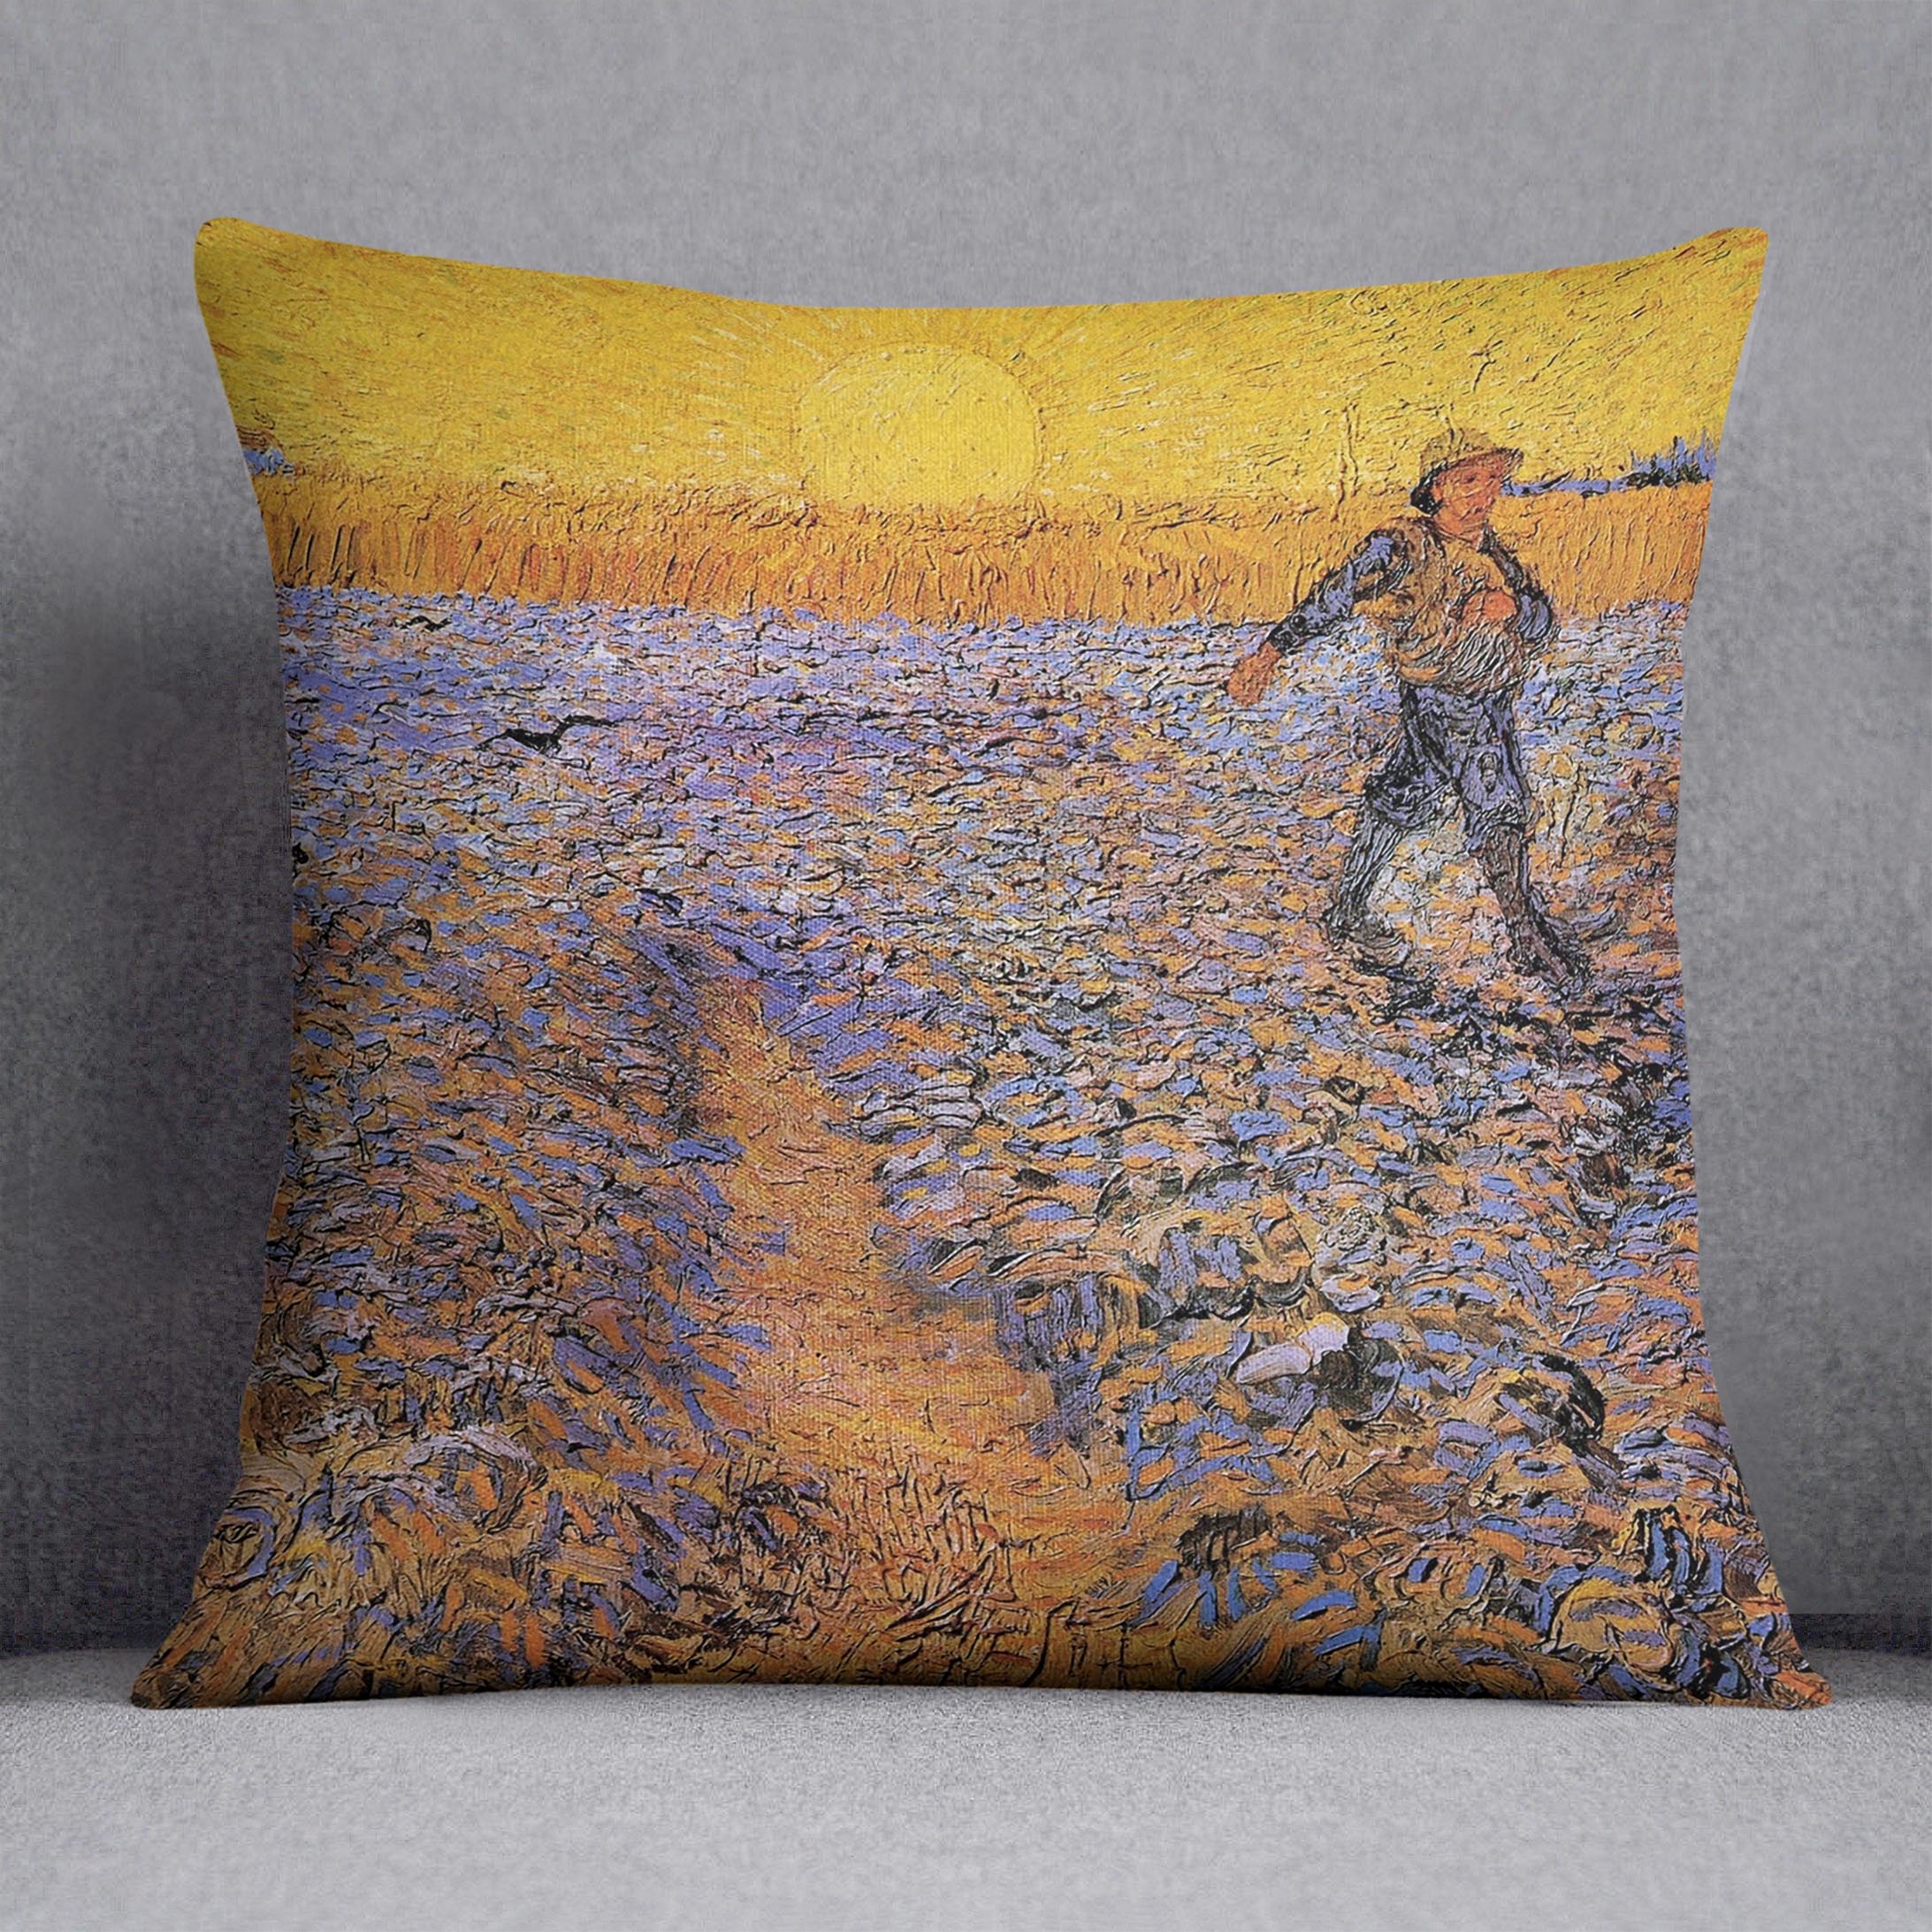 The Sower 3 by Van Gogh Cushion